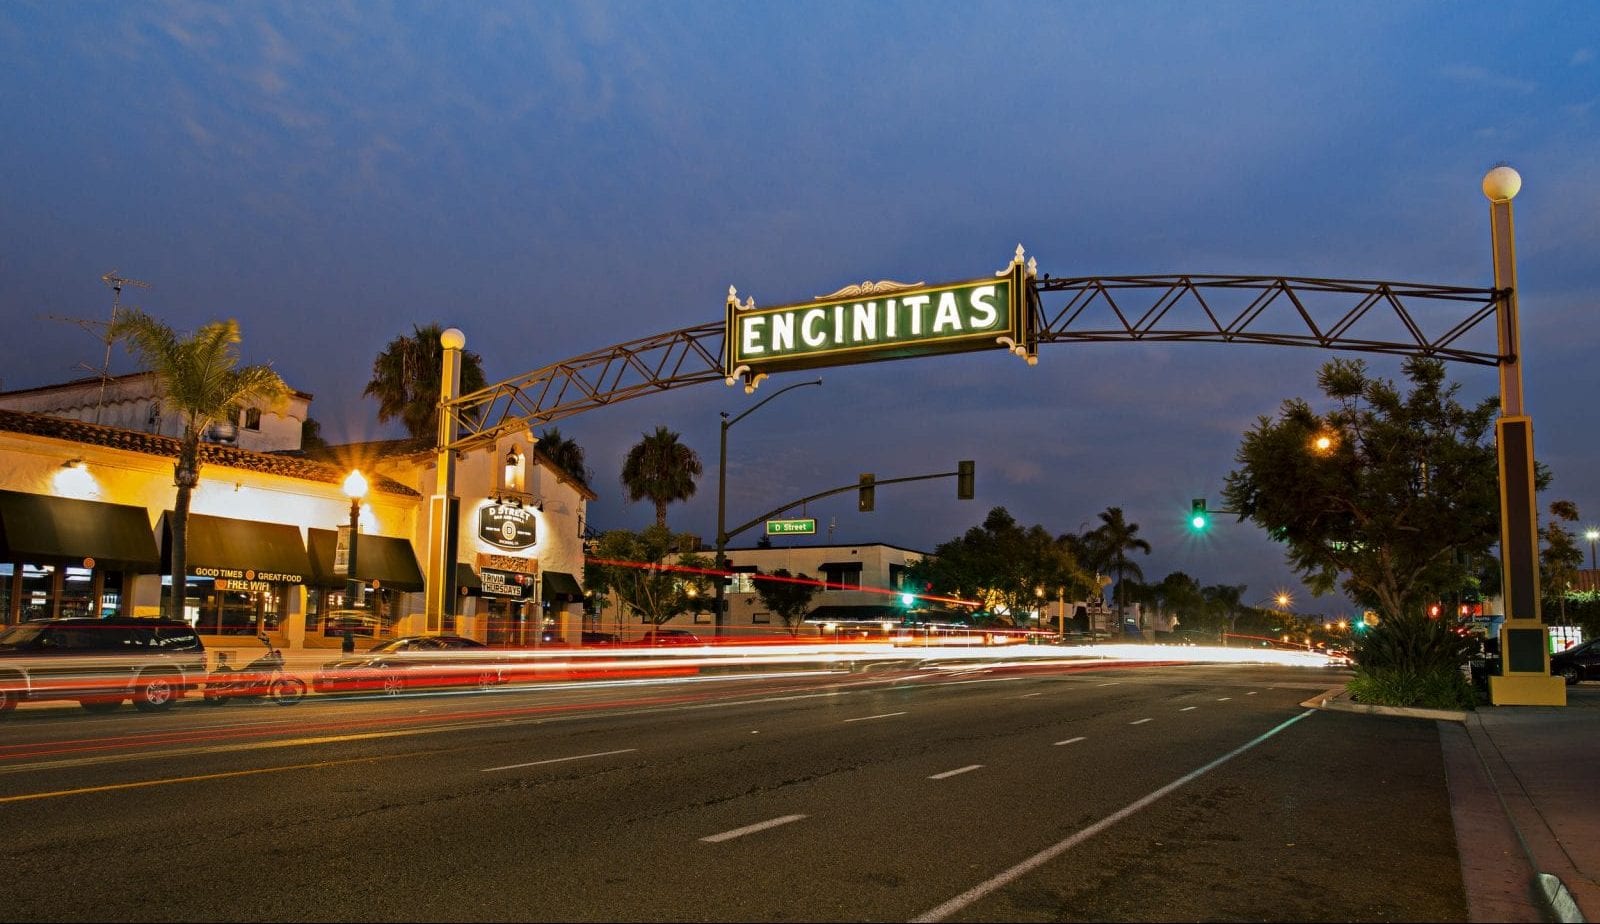 San Diego Students Design for the Encinitas Housing Crisis